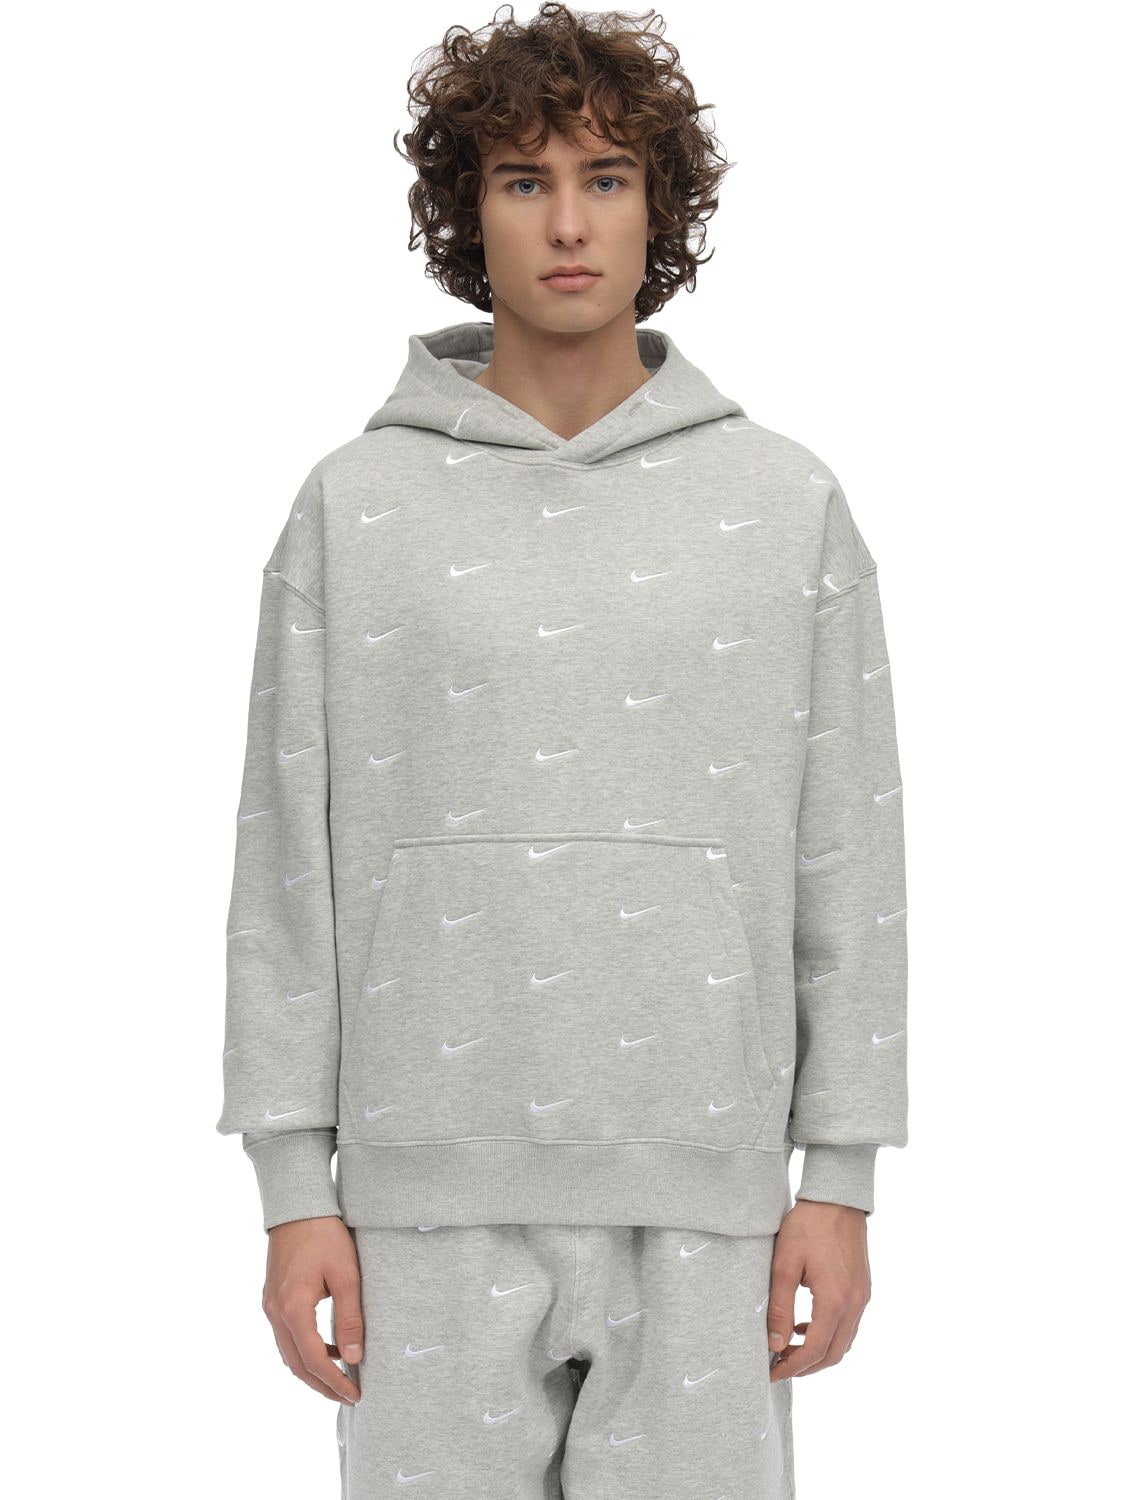 nike nrg swoosh logo men's hoodie